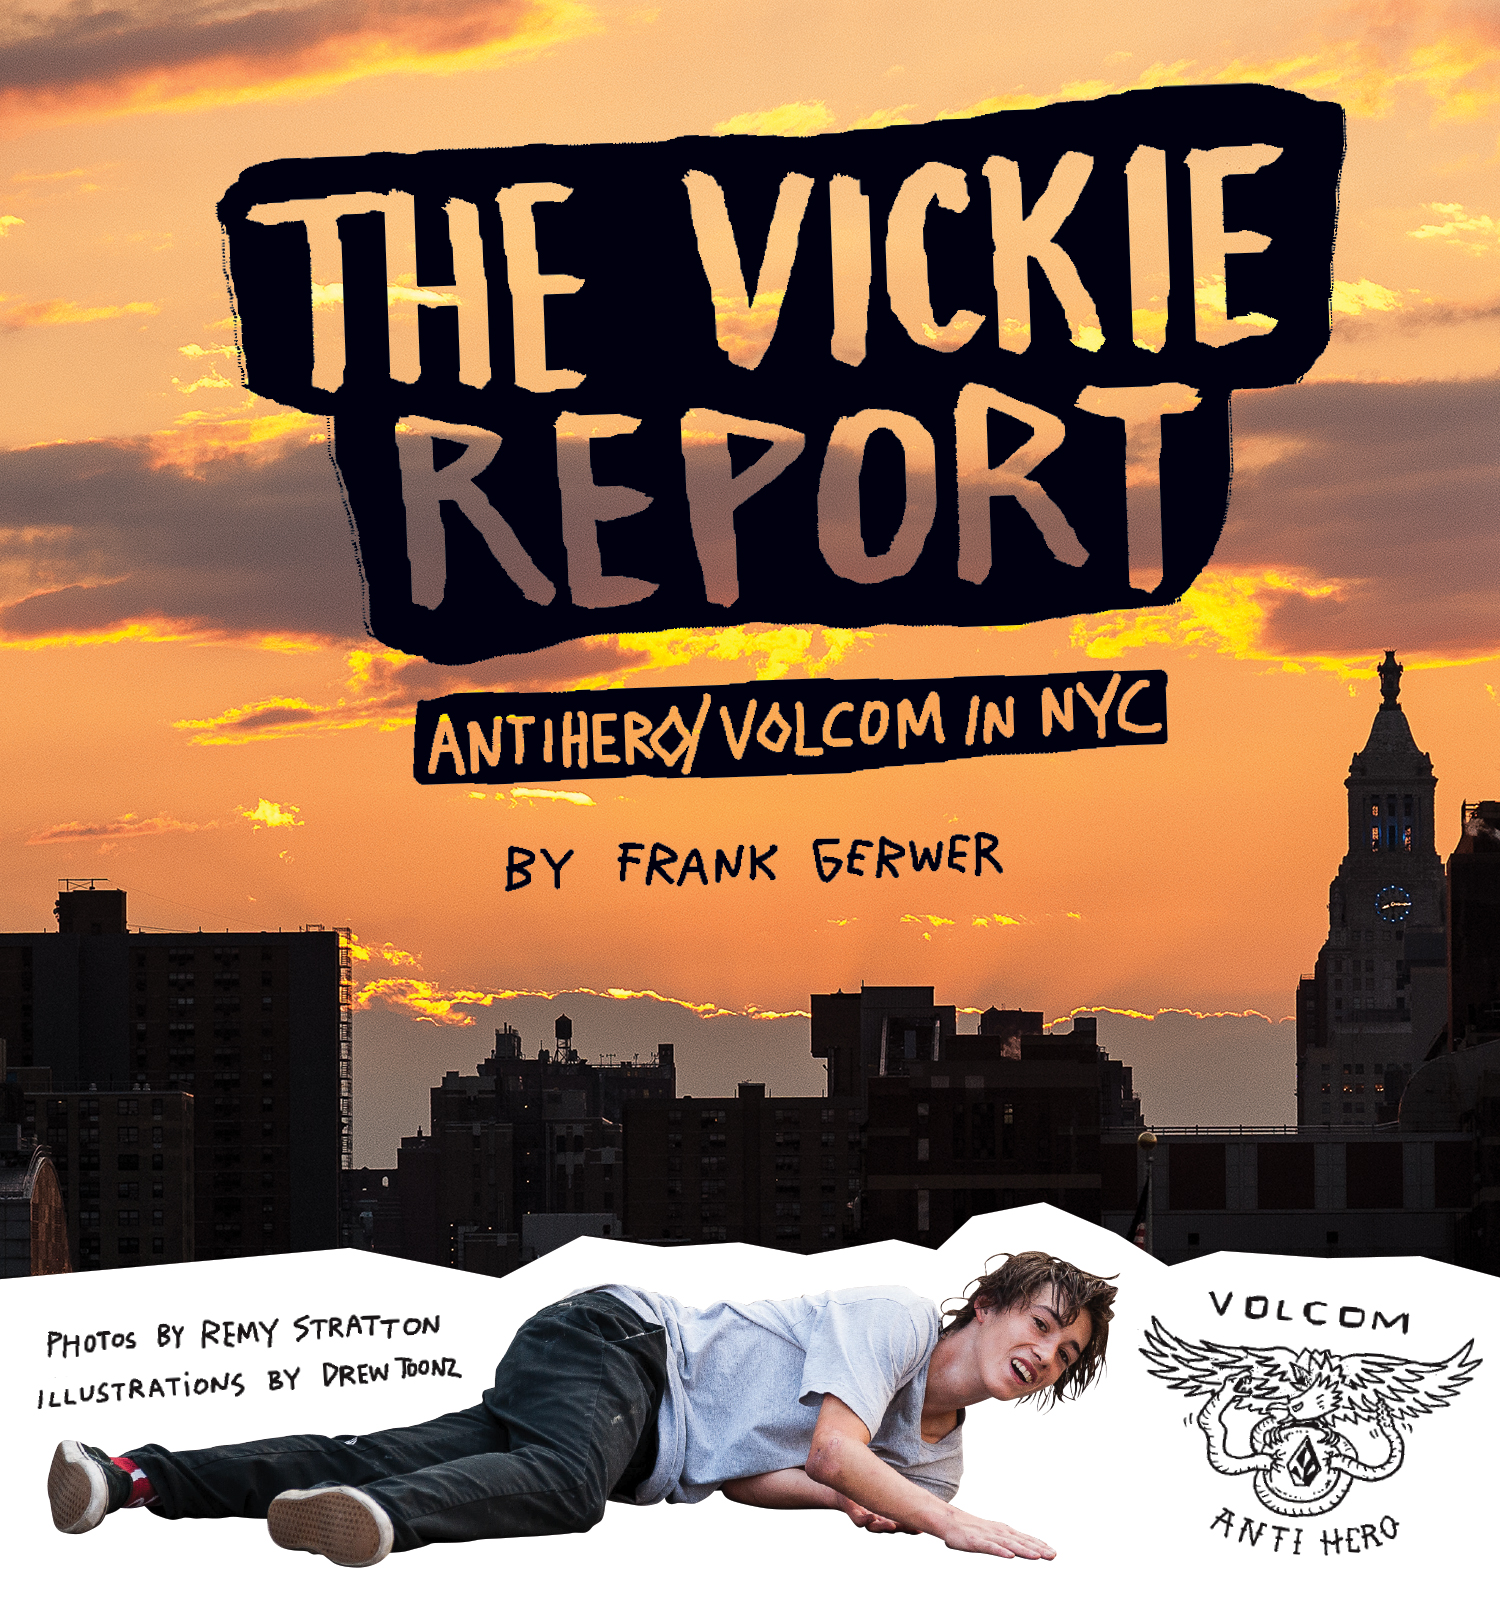 Antihero x Volcom “The Vickie Report” via Frank Gerwer (2016)